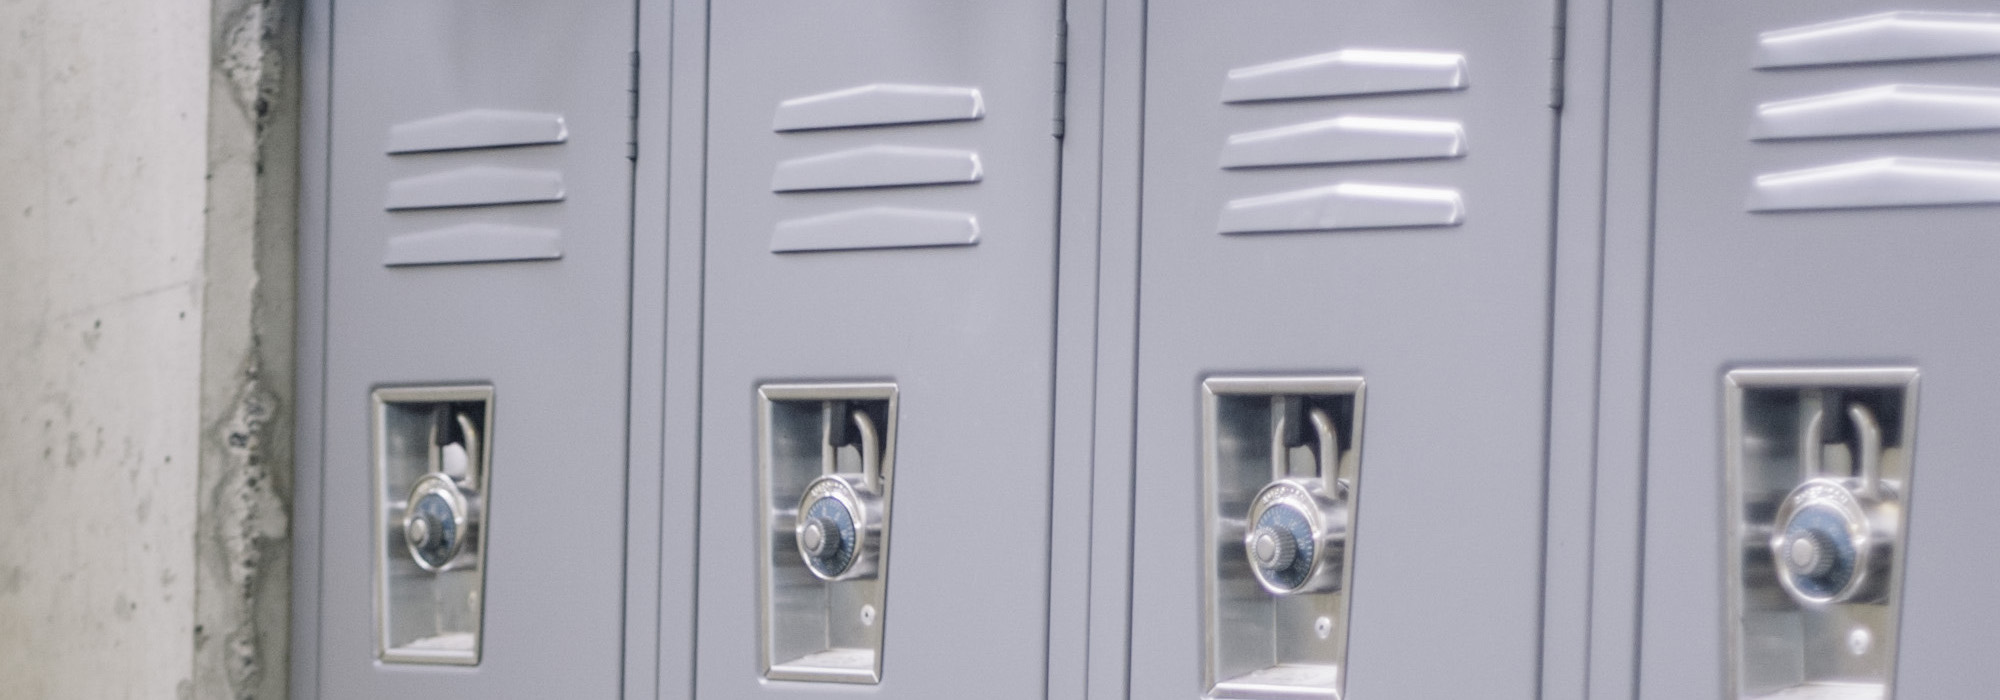 Lockers and locks in Locker Rooms